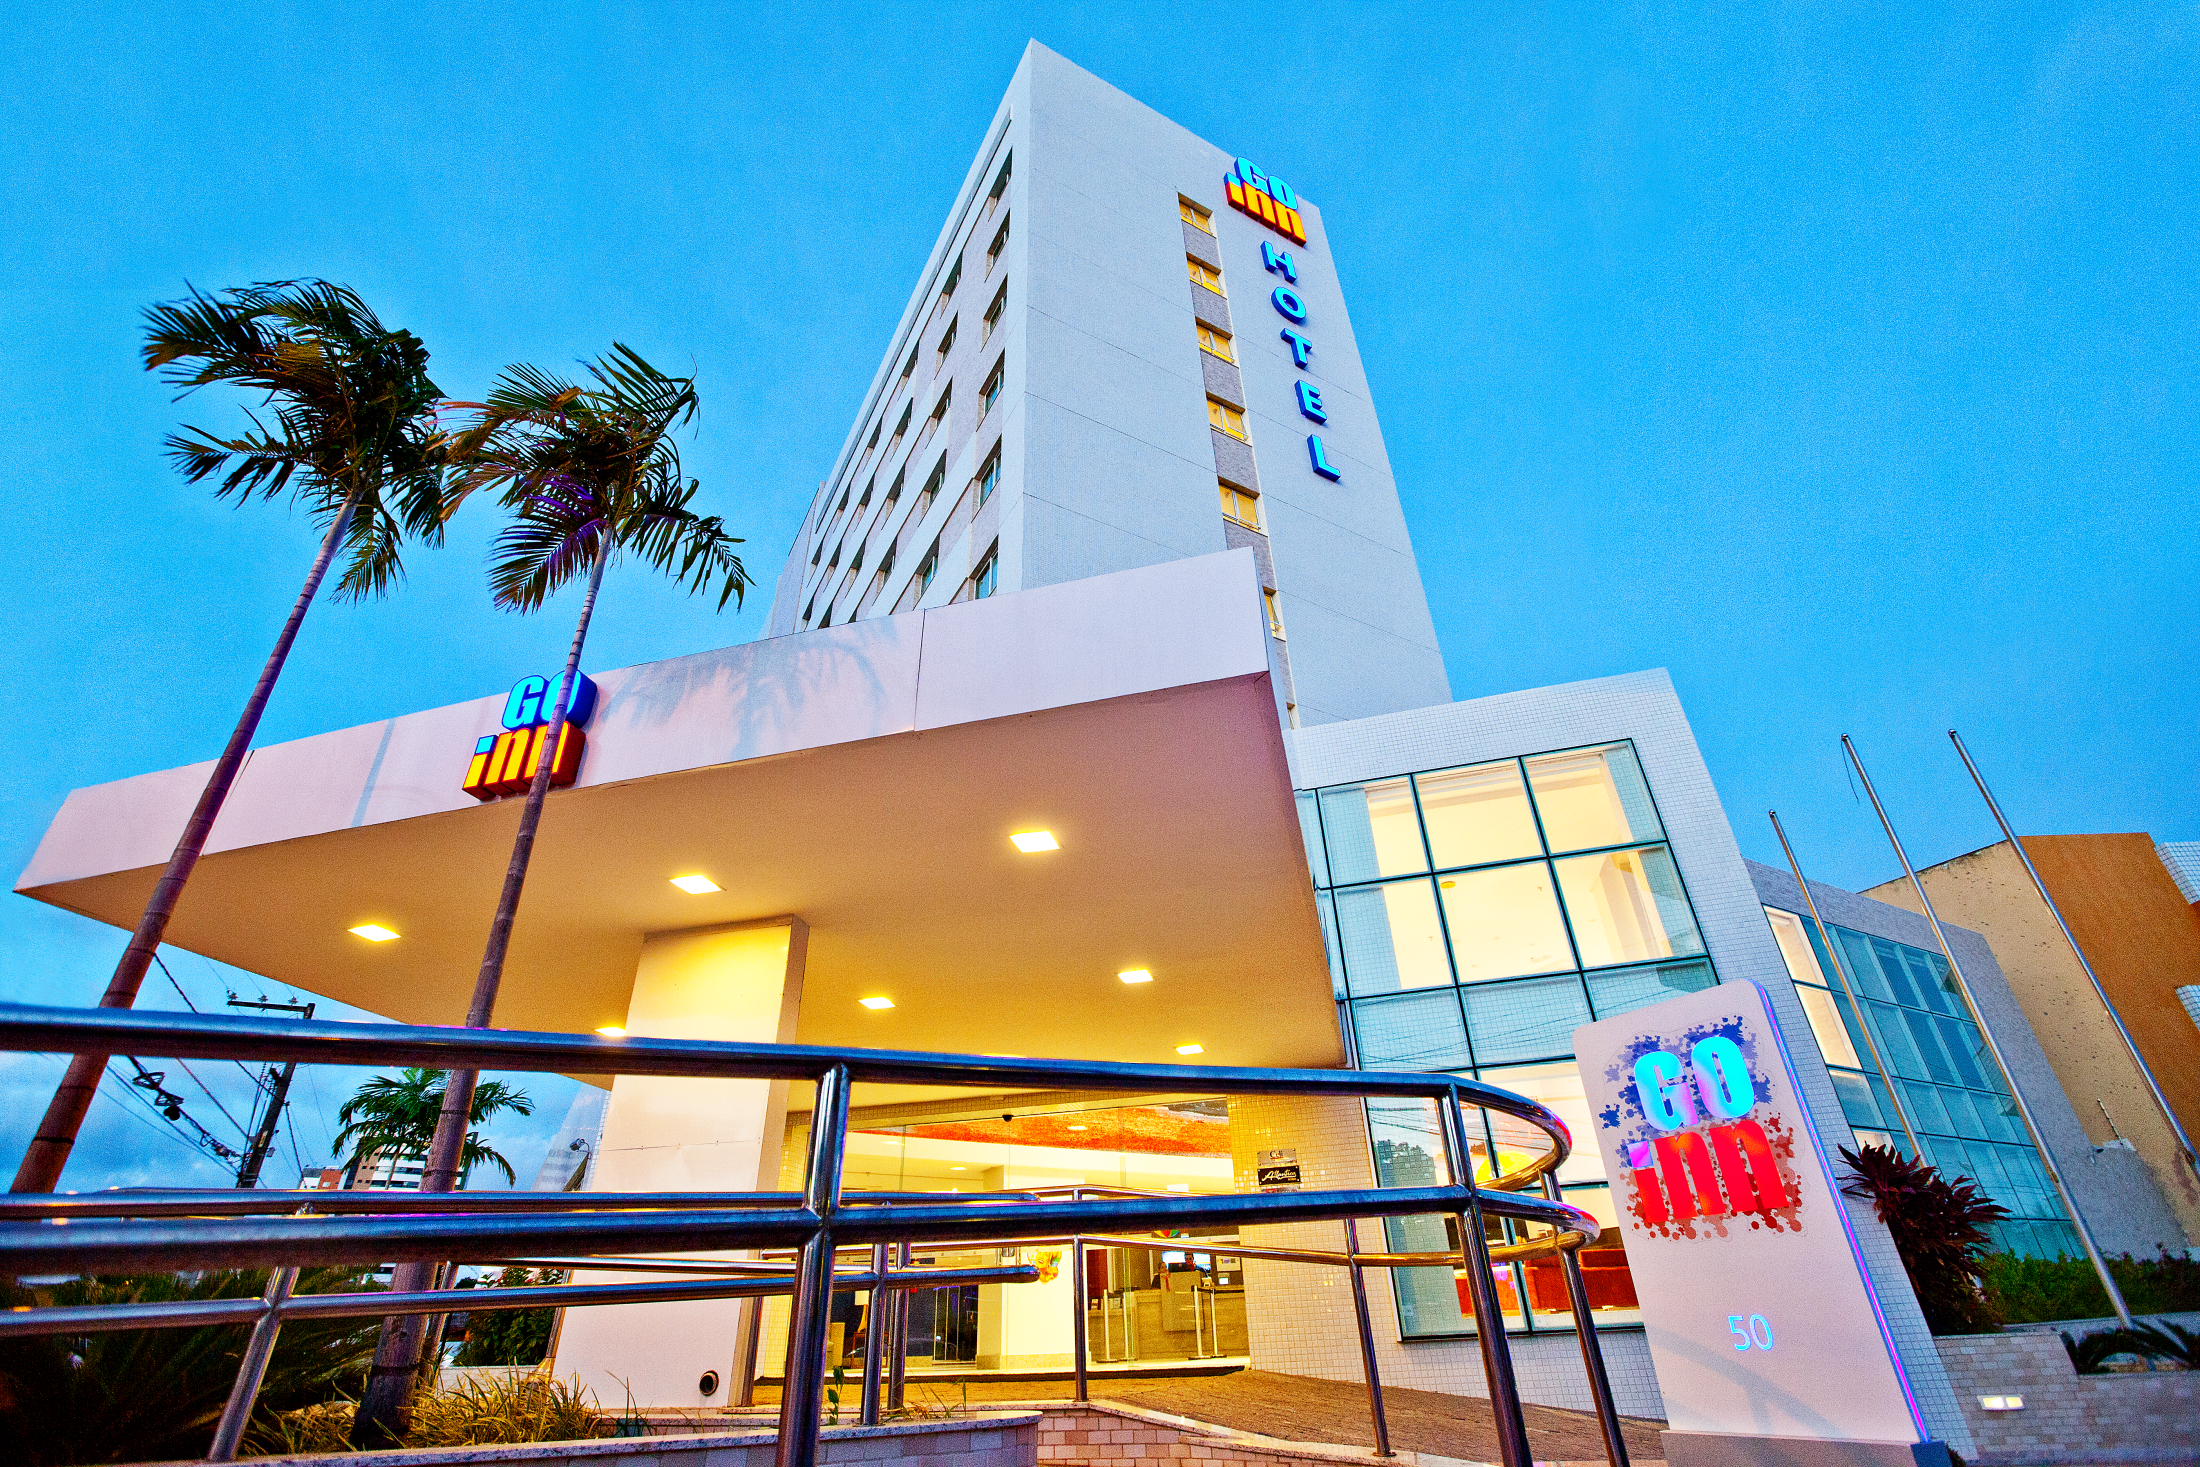 Go Inn Hotel Aracaju, Go Inn Hotel, Go Inn, Hotel, Aracaju, fotos de Aracaju, Sergipe, Márcio Dantas, Lugar Perfeito, Viajar, turismo, hospedagem